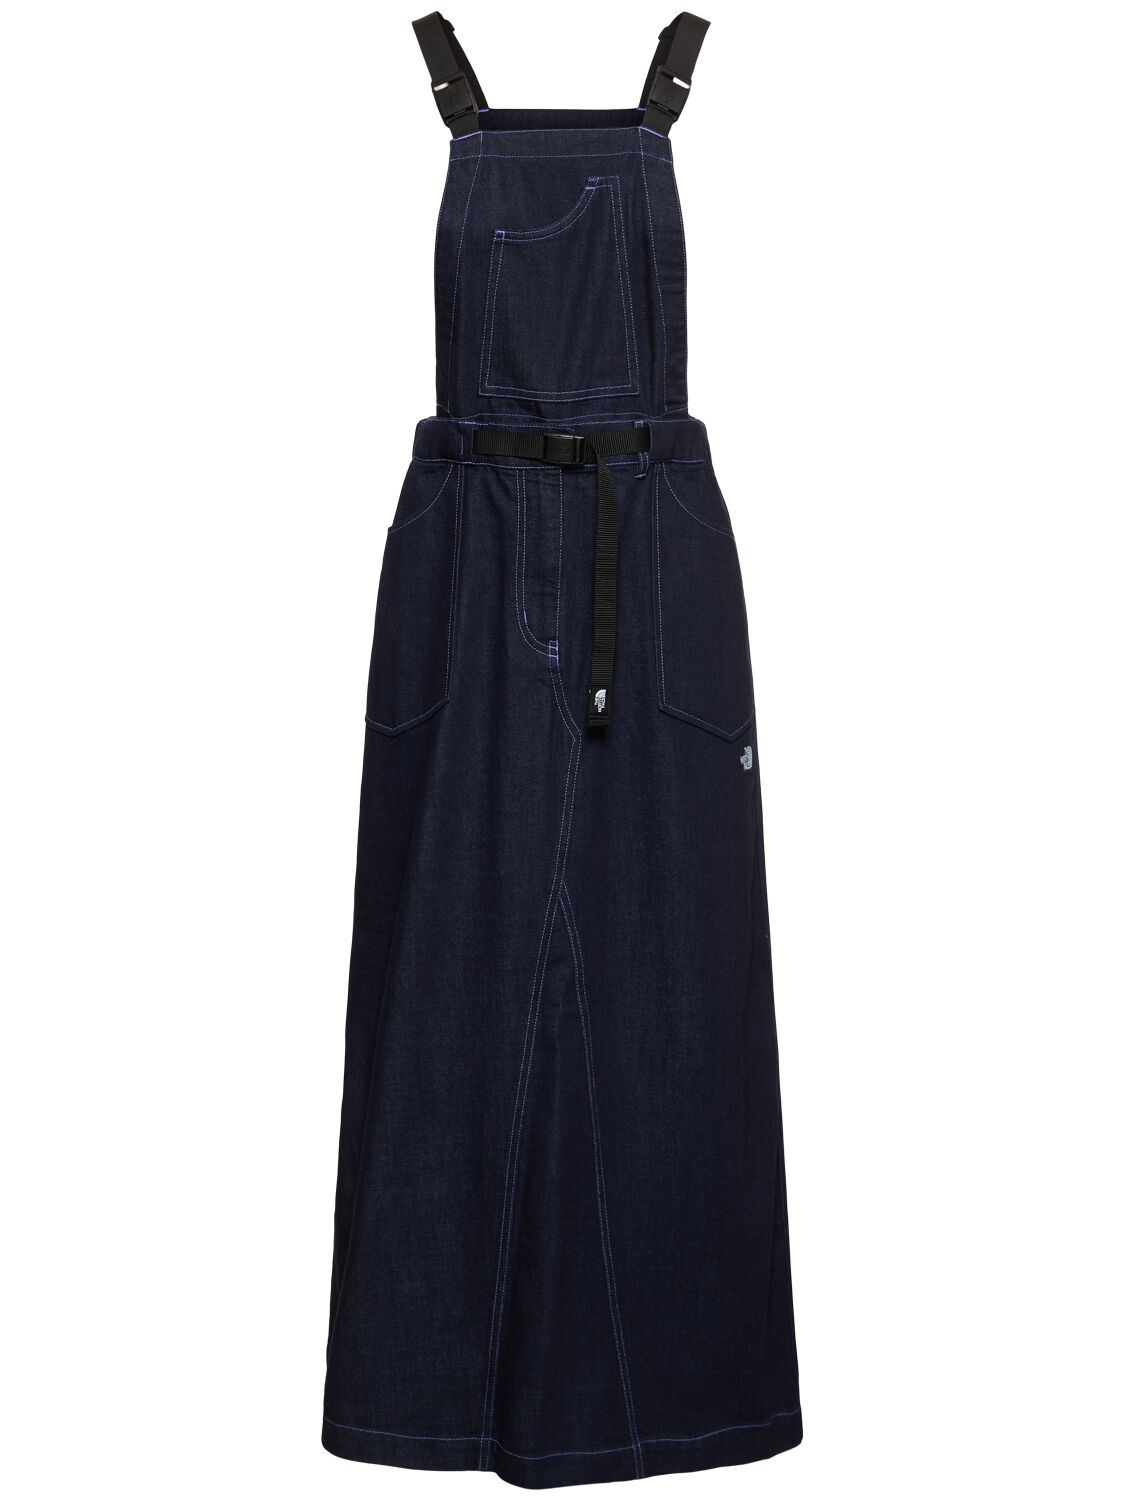 Image of Denim Overall Dress